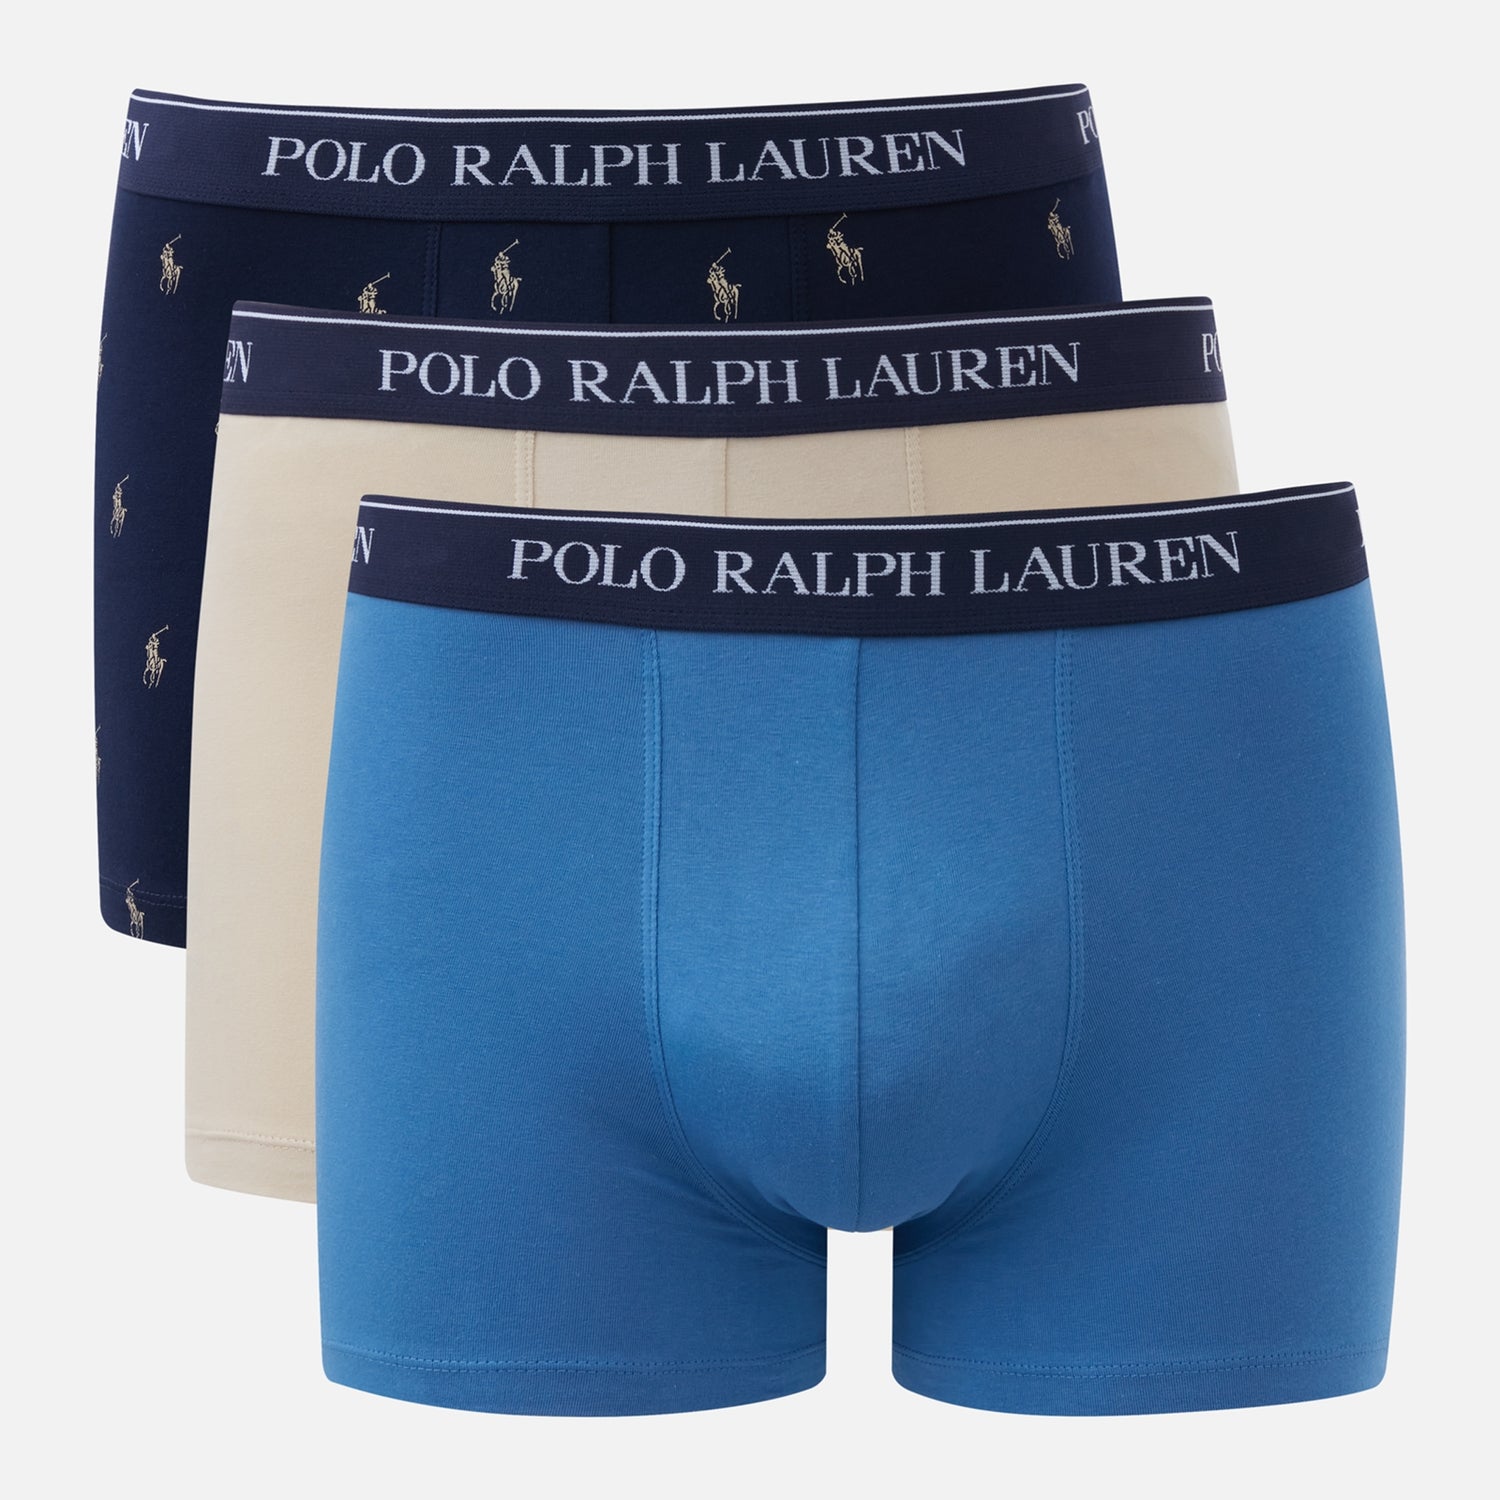 Polo Ralph Lauren Three-Pack Cotton Trunks | TheHut.com